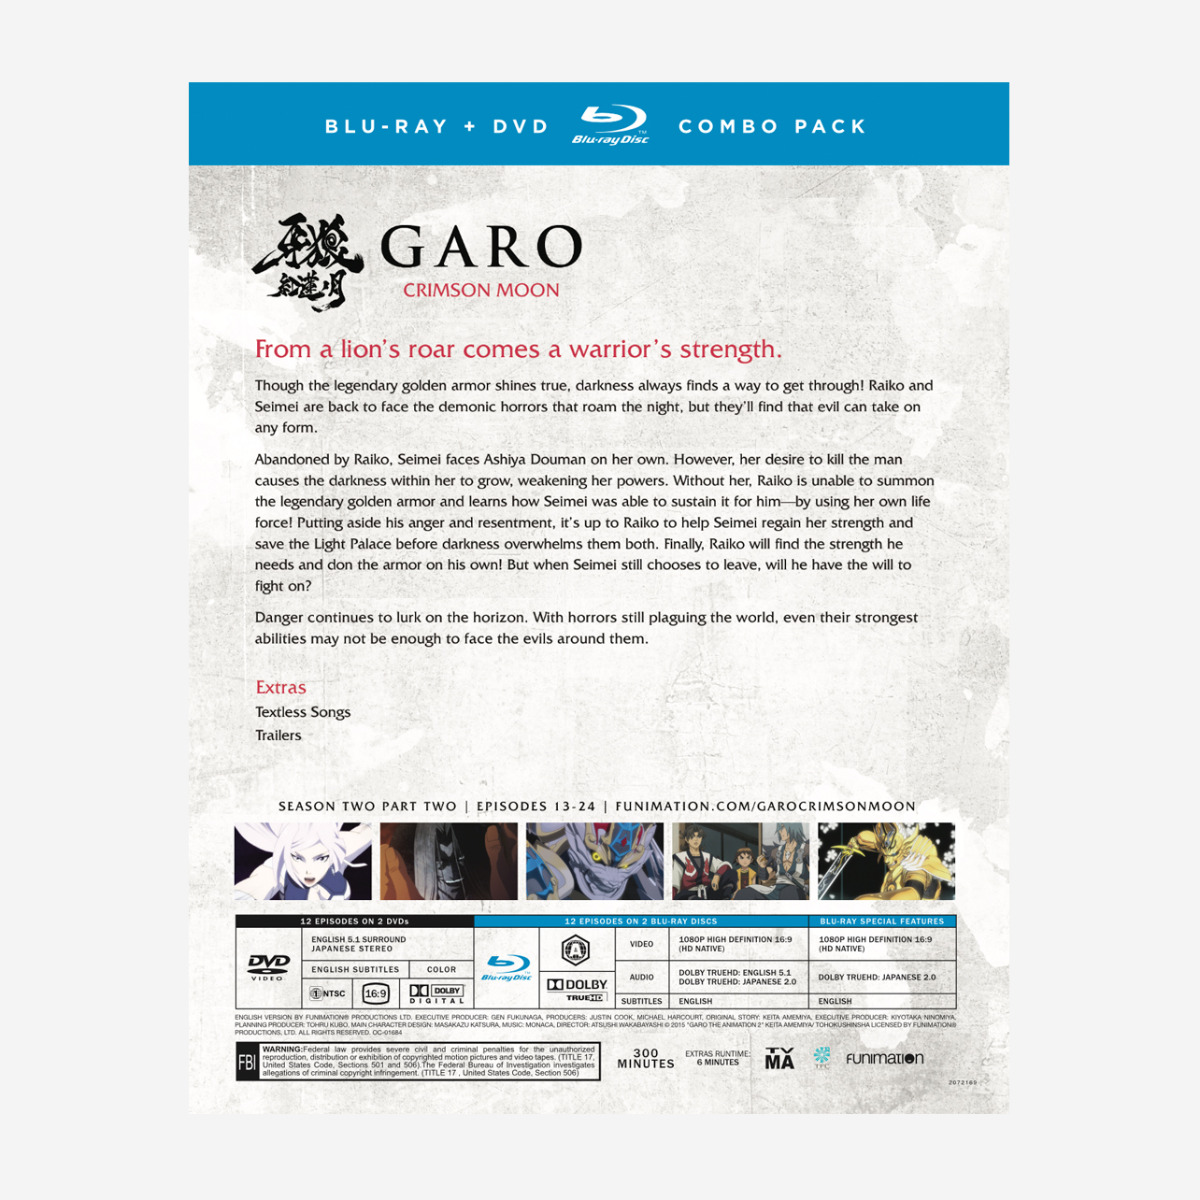 Garo: Crimson Moon - Season 2 Part 2 - Blu-ray + DVD image count 1